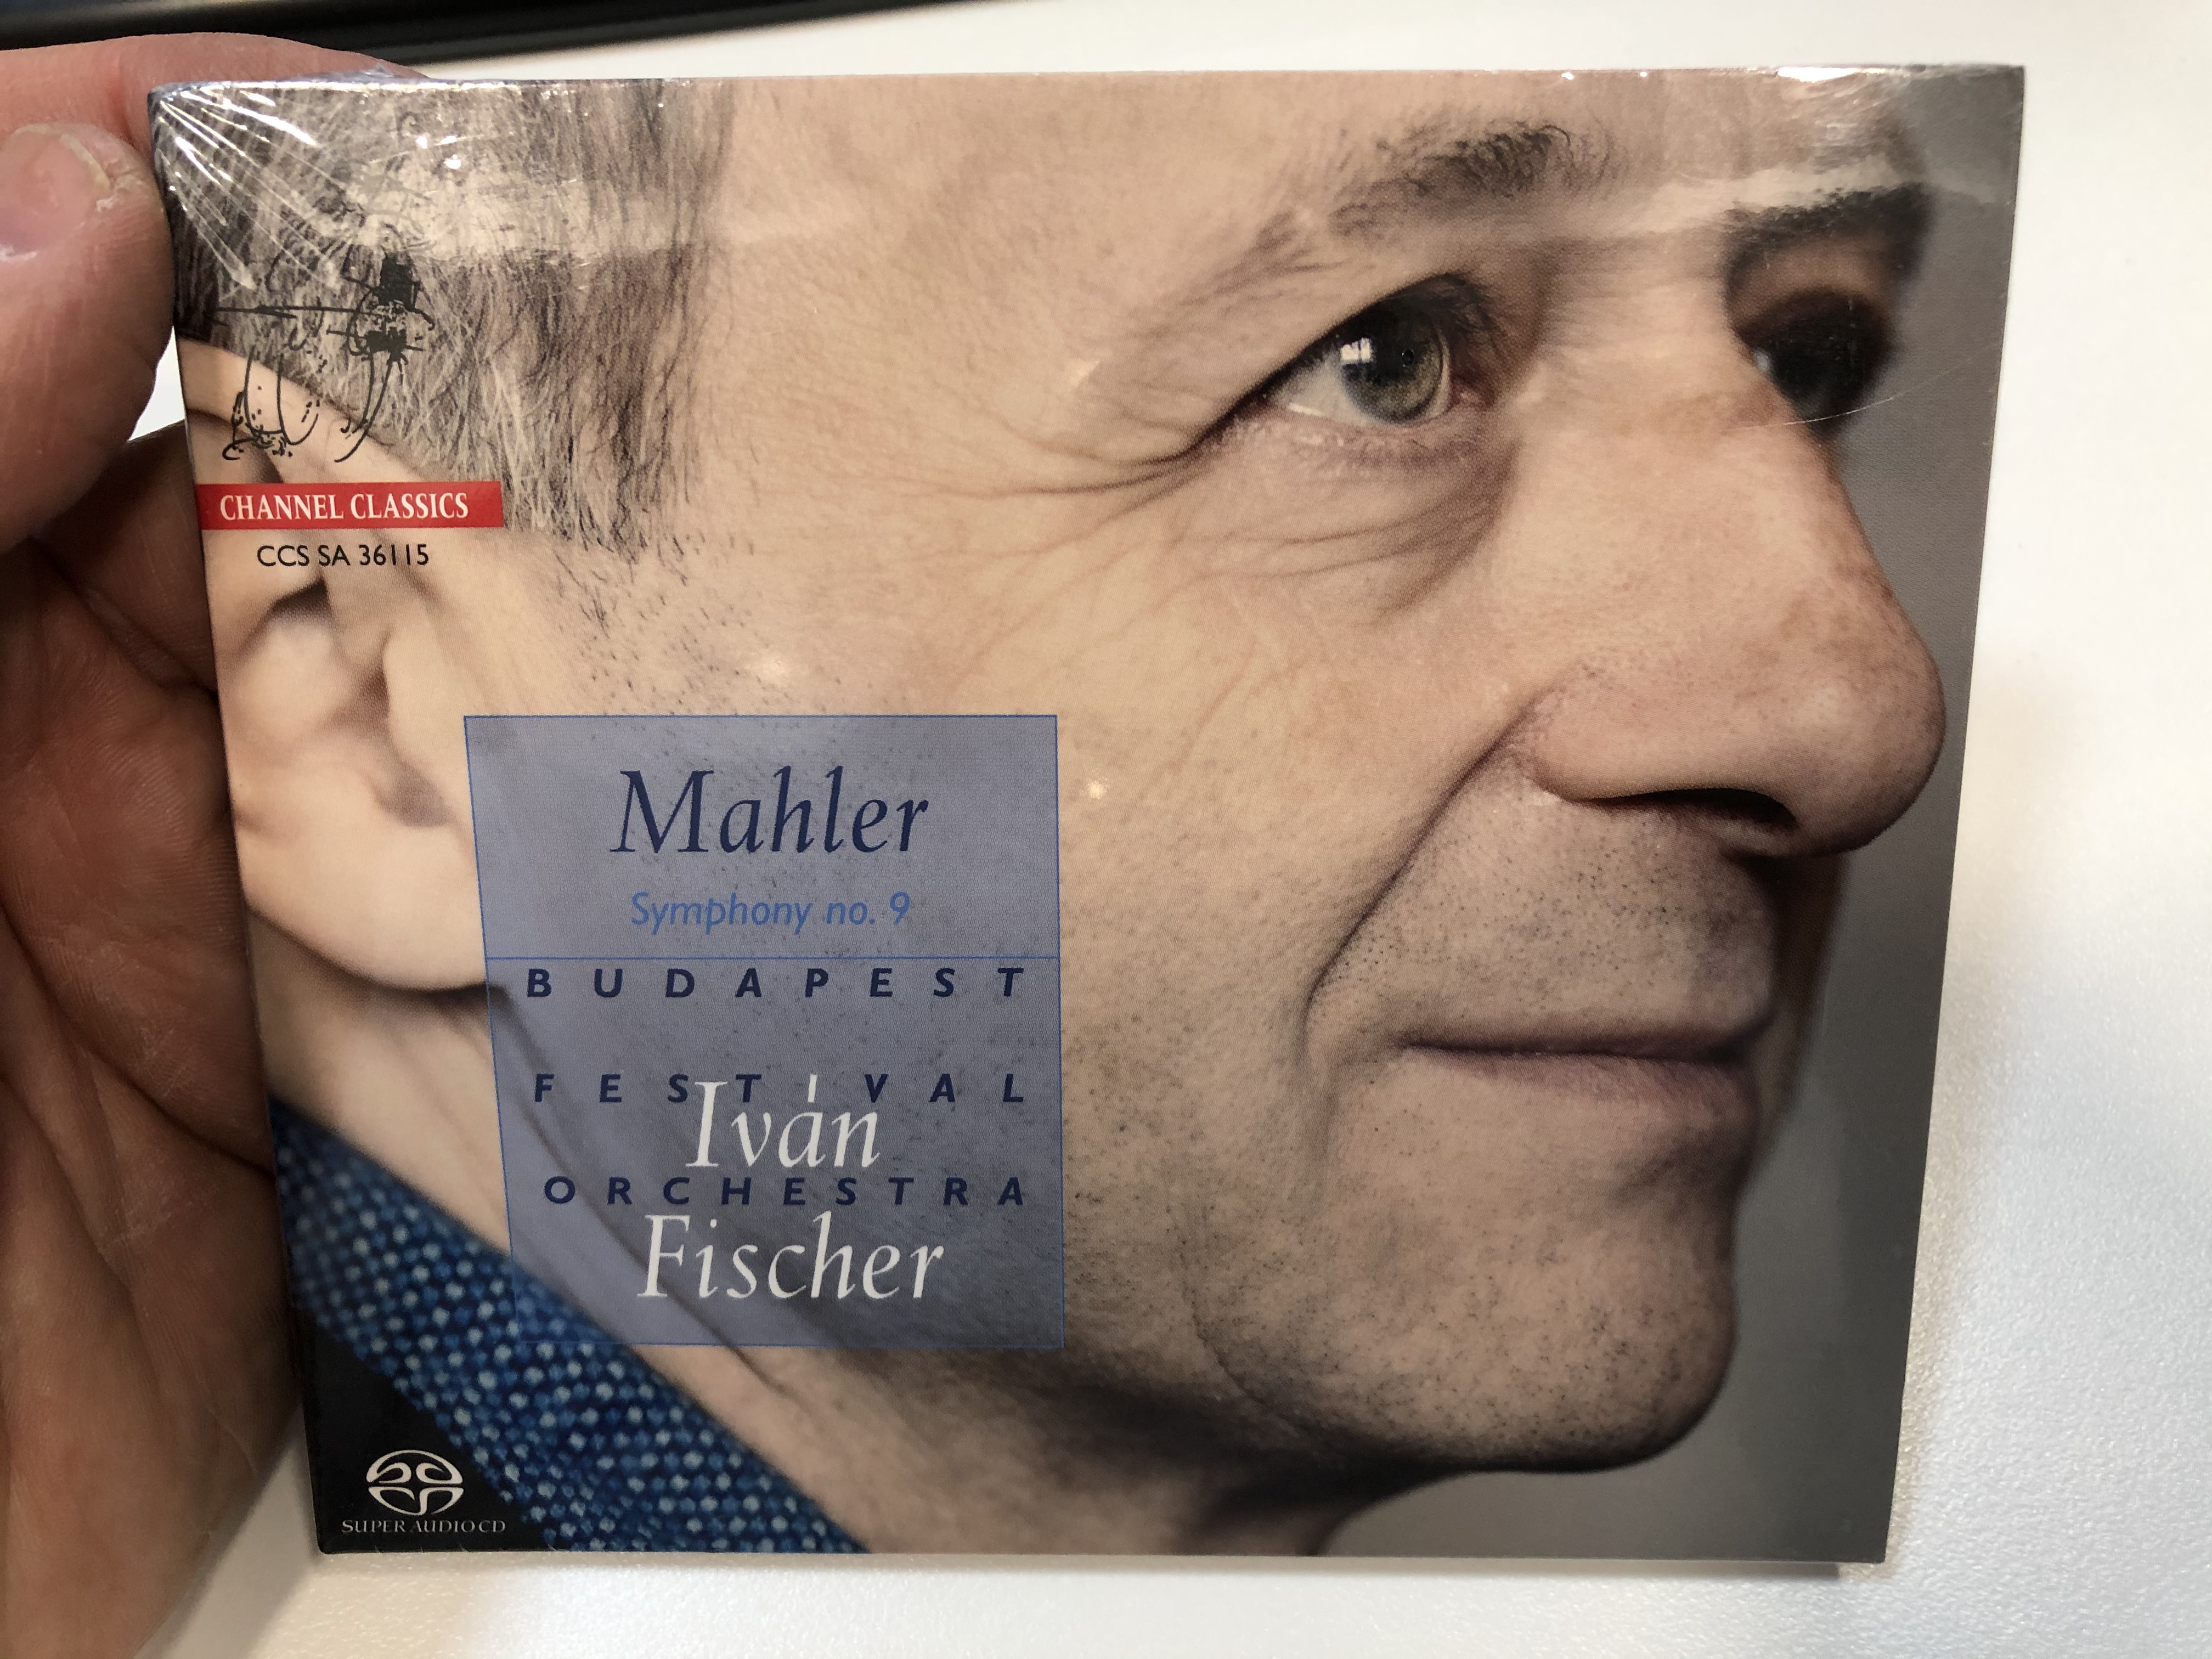 mahler-symphony-no.-9-iv-n-fischer-budapest-festival-orchestra-channel-classics-audio-cd-2015-ccs-sa-36115-1-.jpg